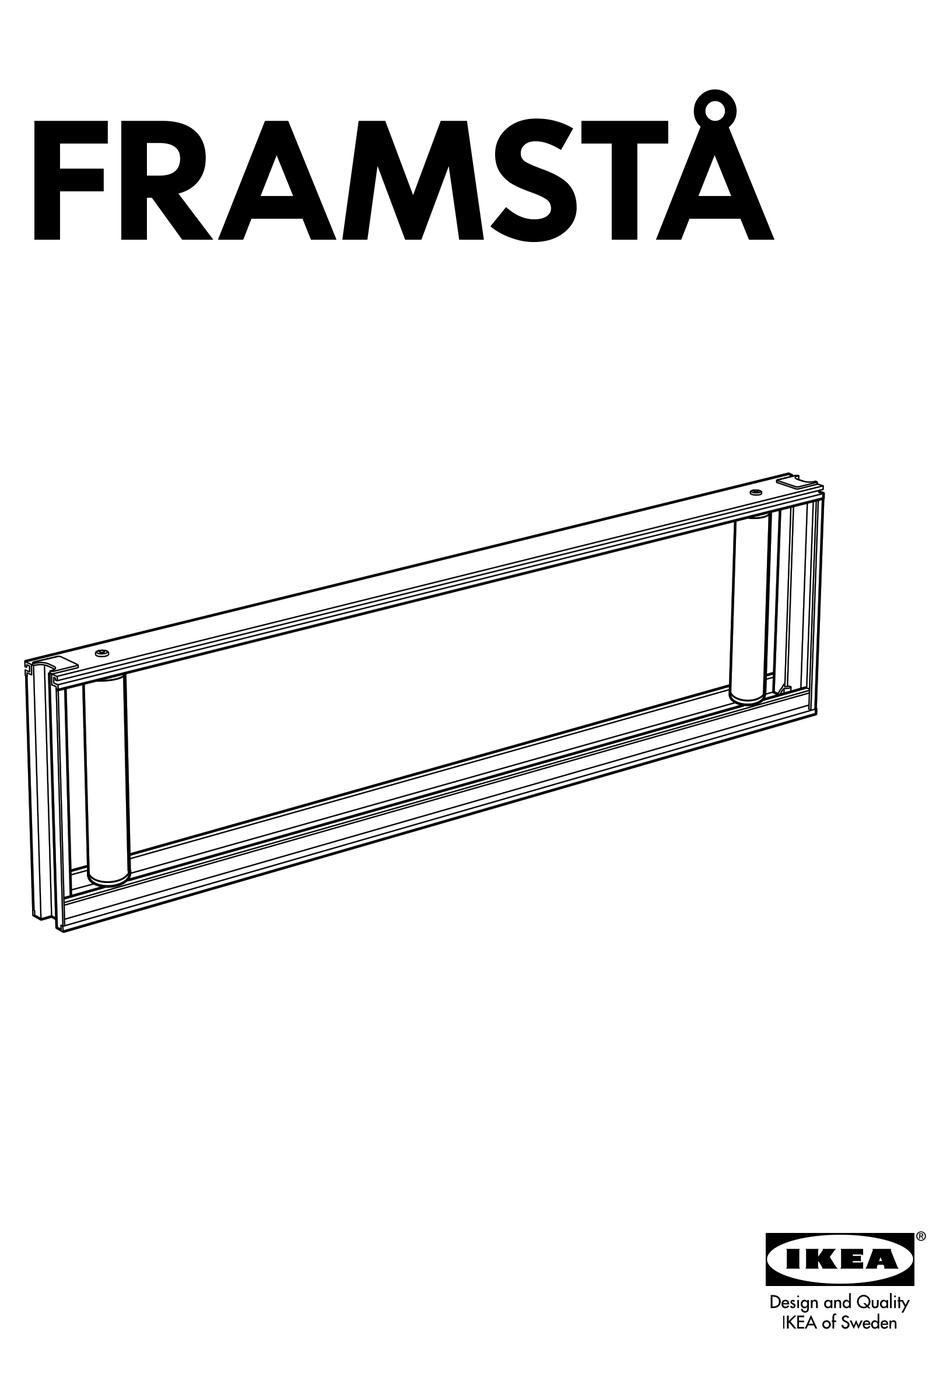 Details about   IKEA Framsta Base Unit 